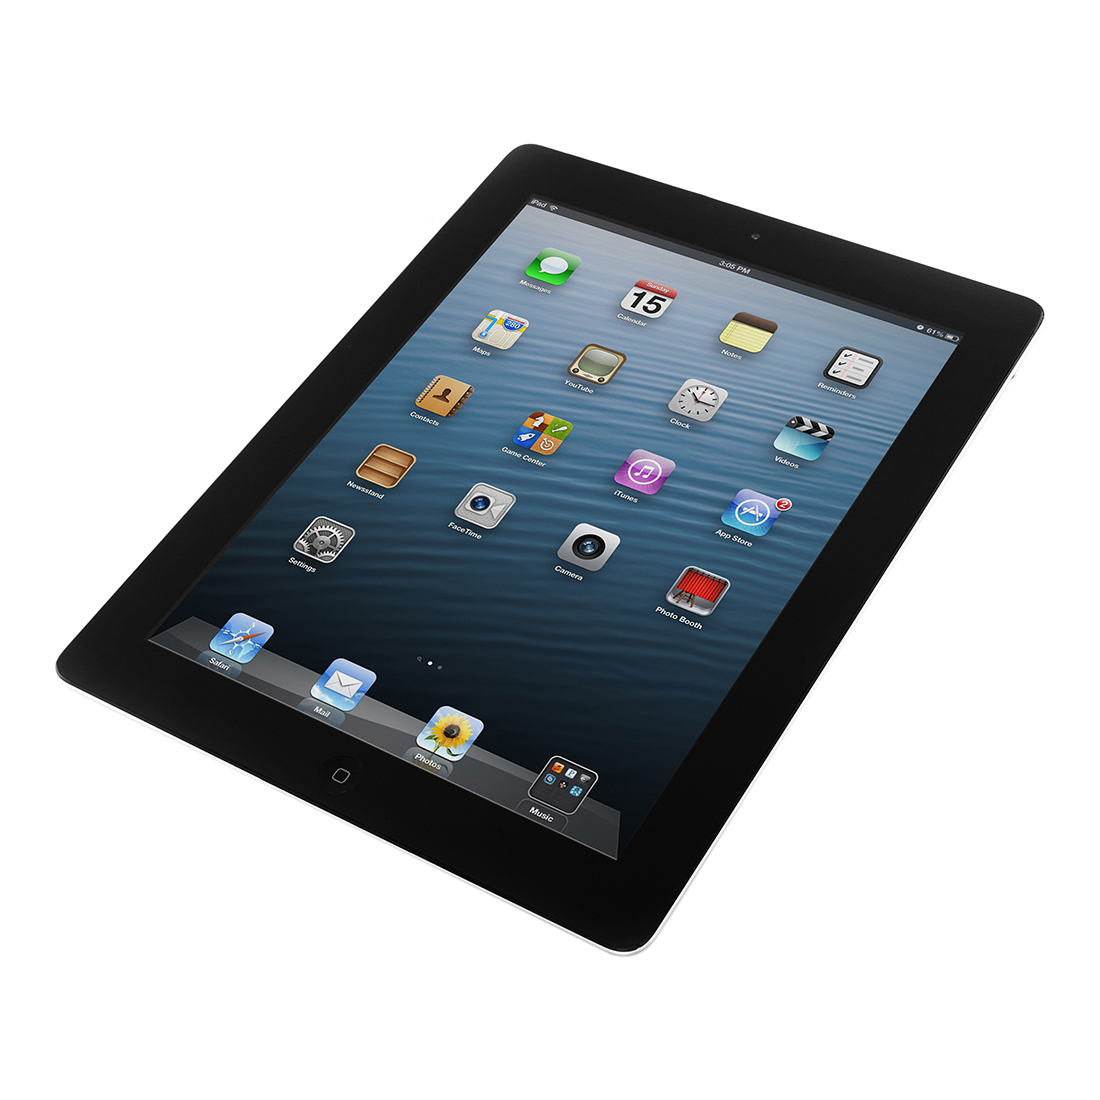 Restored Apple iPad 2 WiFi 16GB 9.7" LCD Bluetooth Tablet - Black (Refurbished) - image 1 of 2